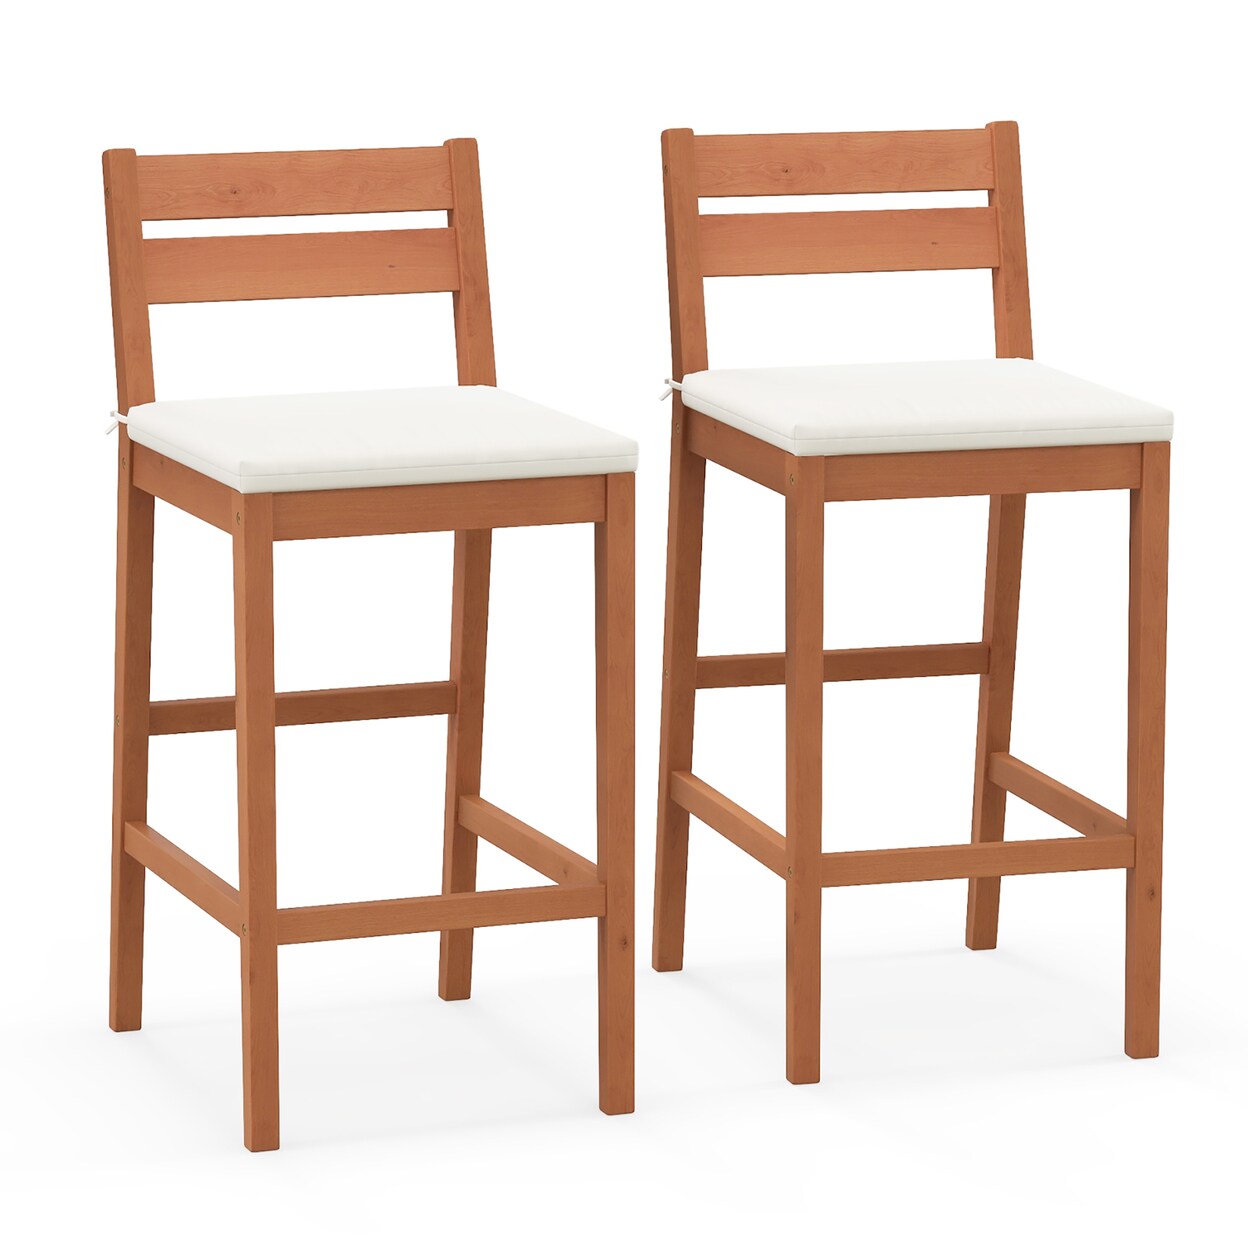 Gymax Patio Eucalyptus Wood Bar Stools Set of 2 Outdoor Bar Height Patio Chairs w/ Cushions